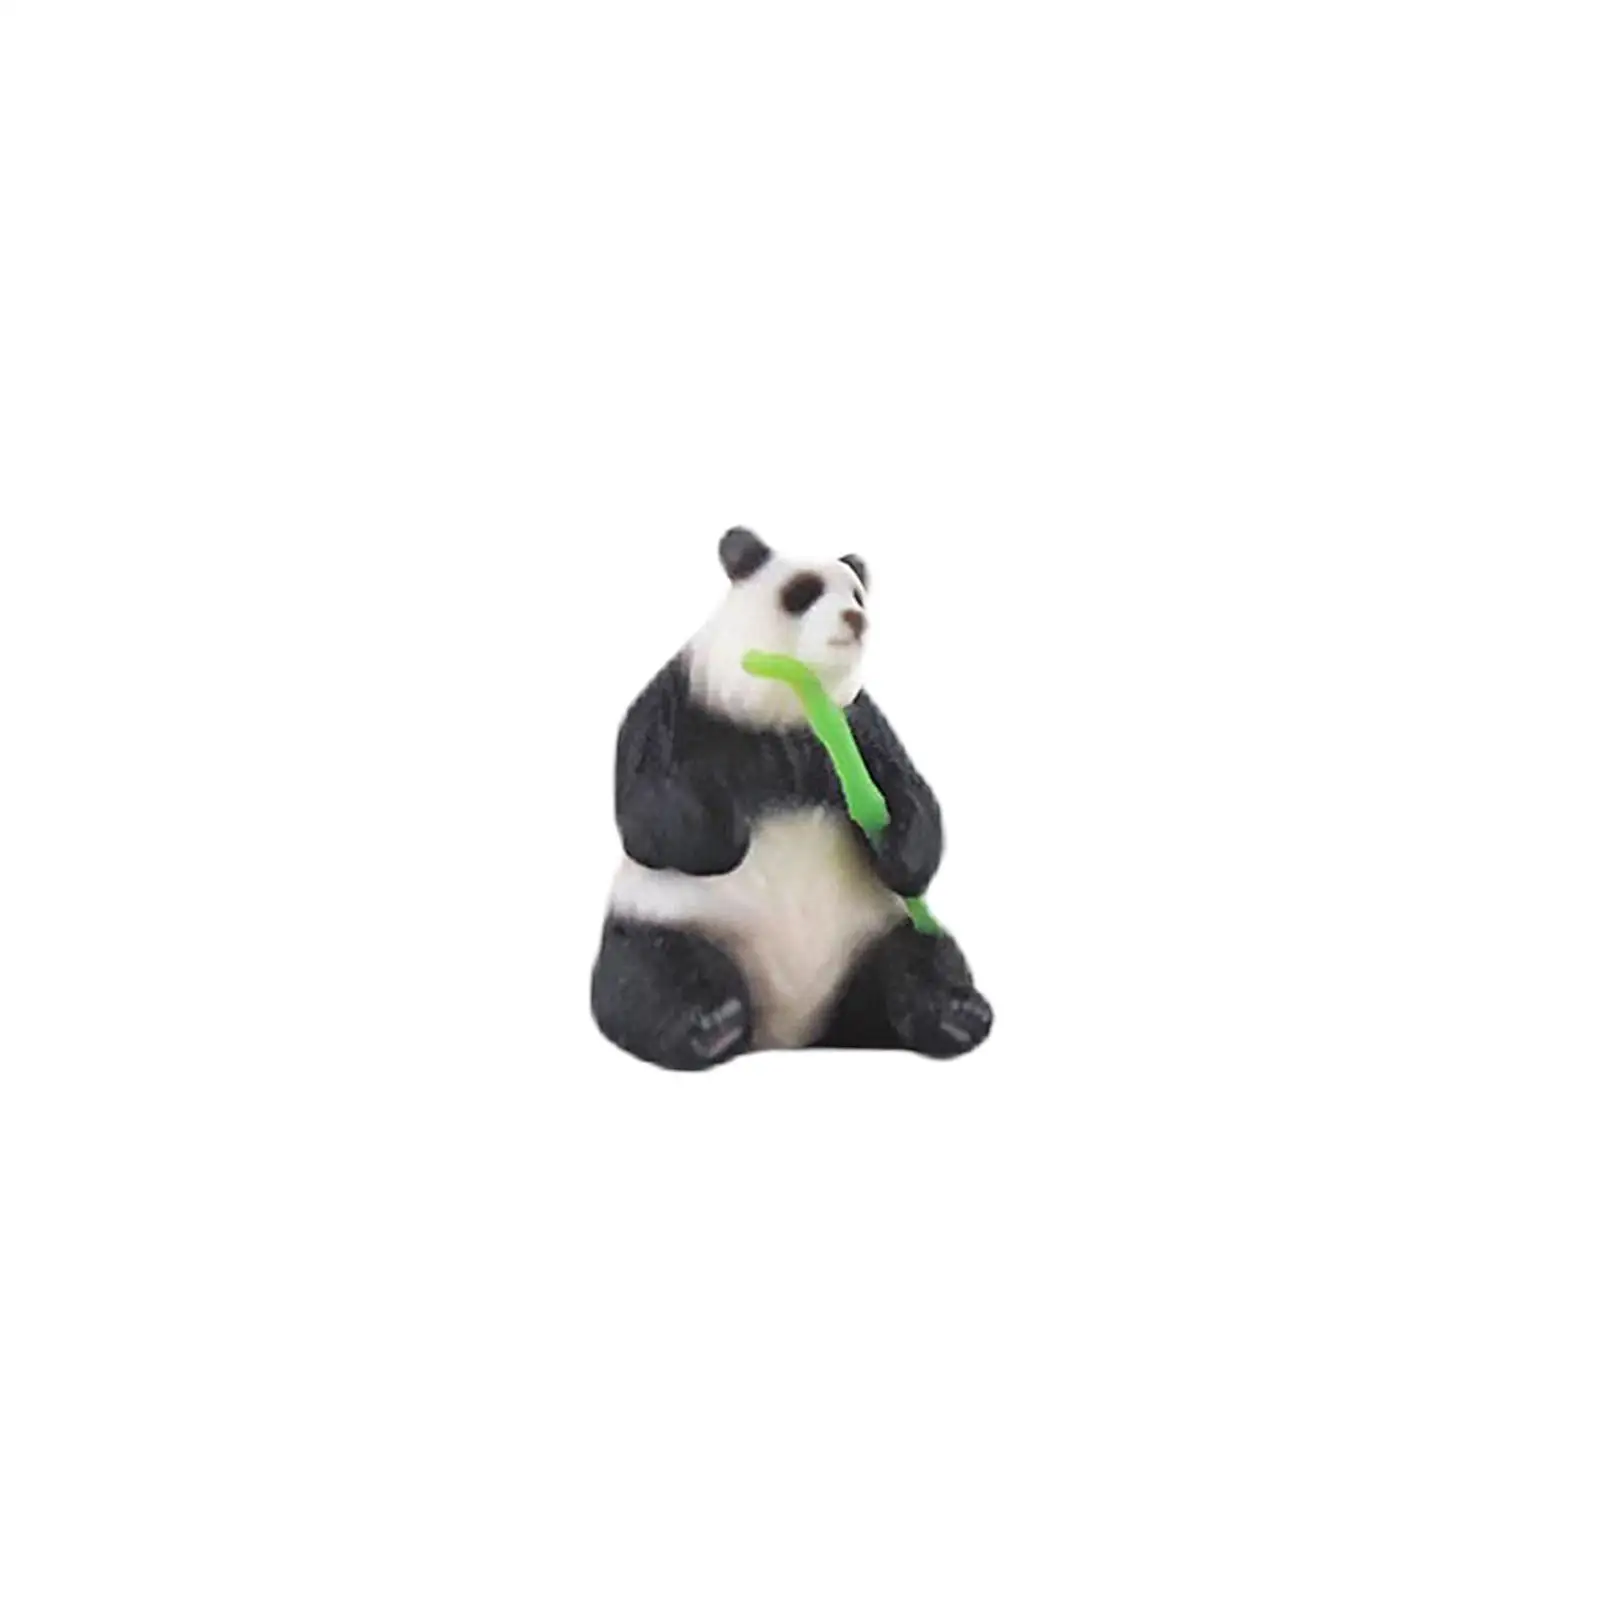 Miniature Resin Pandas 1:64 Scale Cute DIY Crafts Sand Table Micro Landscapes Bonsai Tiny Pandas Model Accessories Diorama Decor